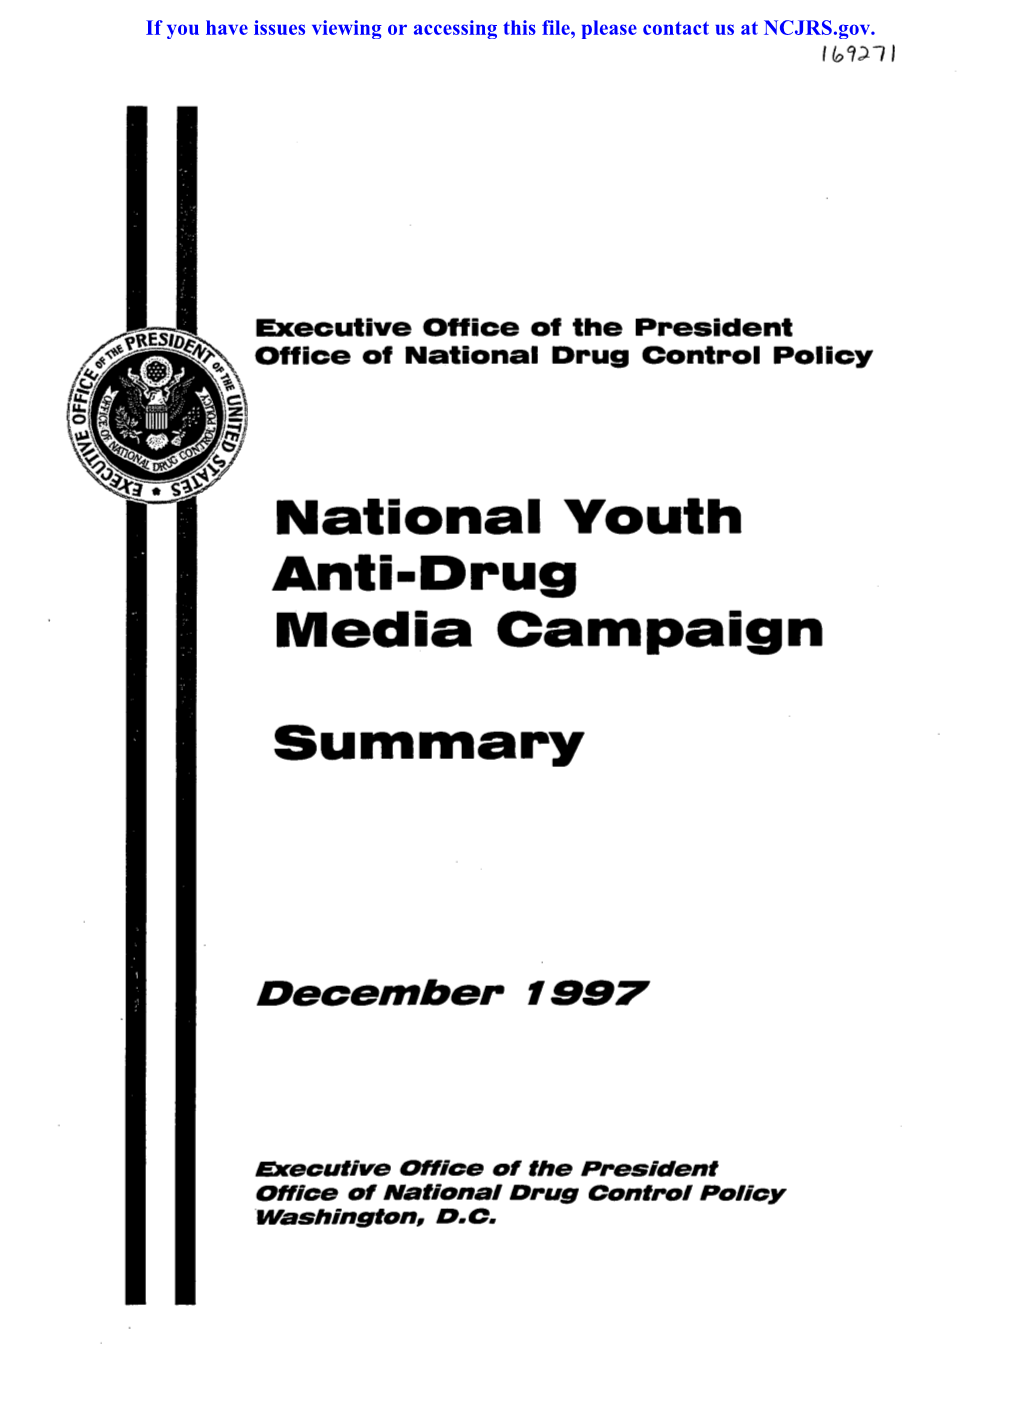 National Youth Anti-Drug Paign Summary